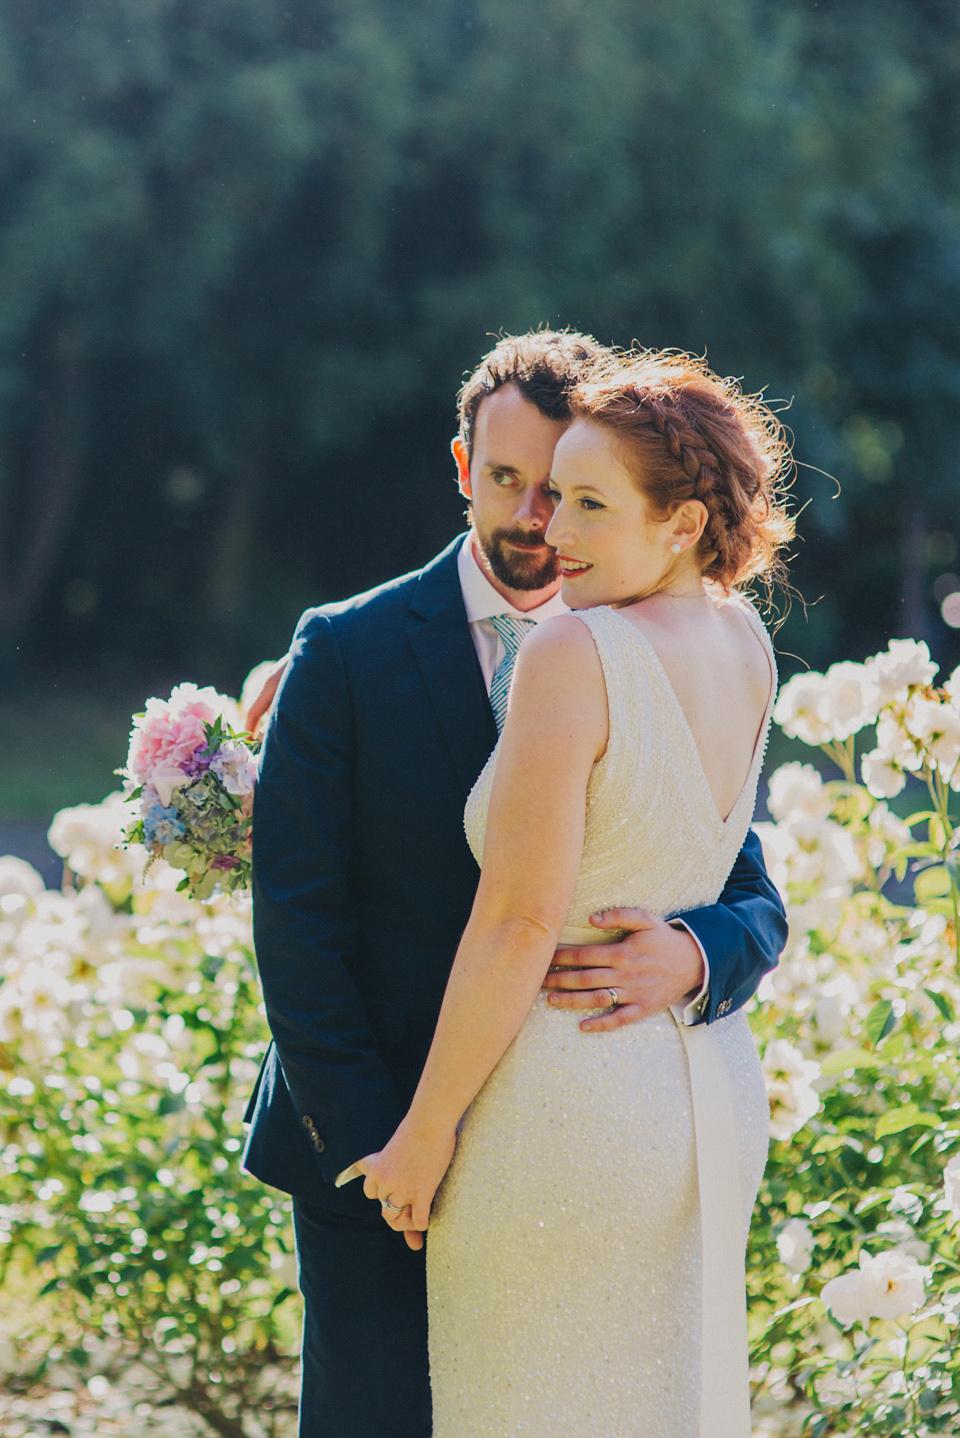 Rachel Gilbert Glamour For An Australian Inspired English Garden Wedding. Images by Peppermint Love Photography.